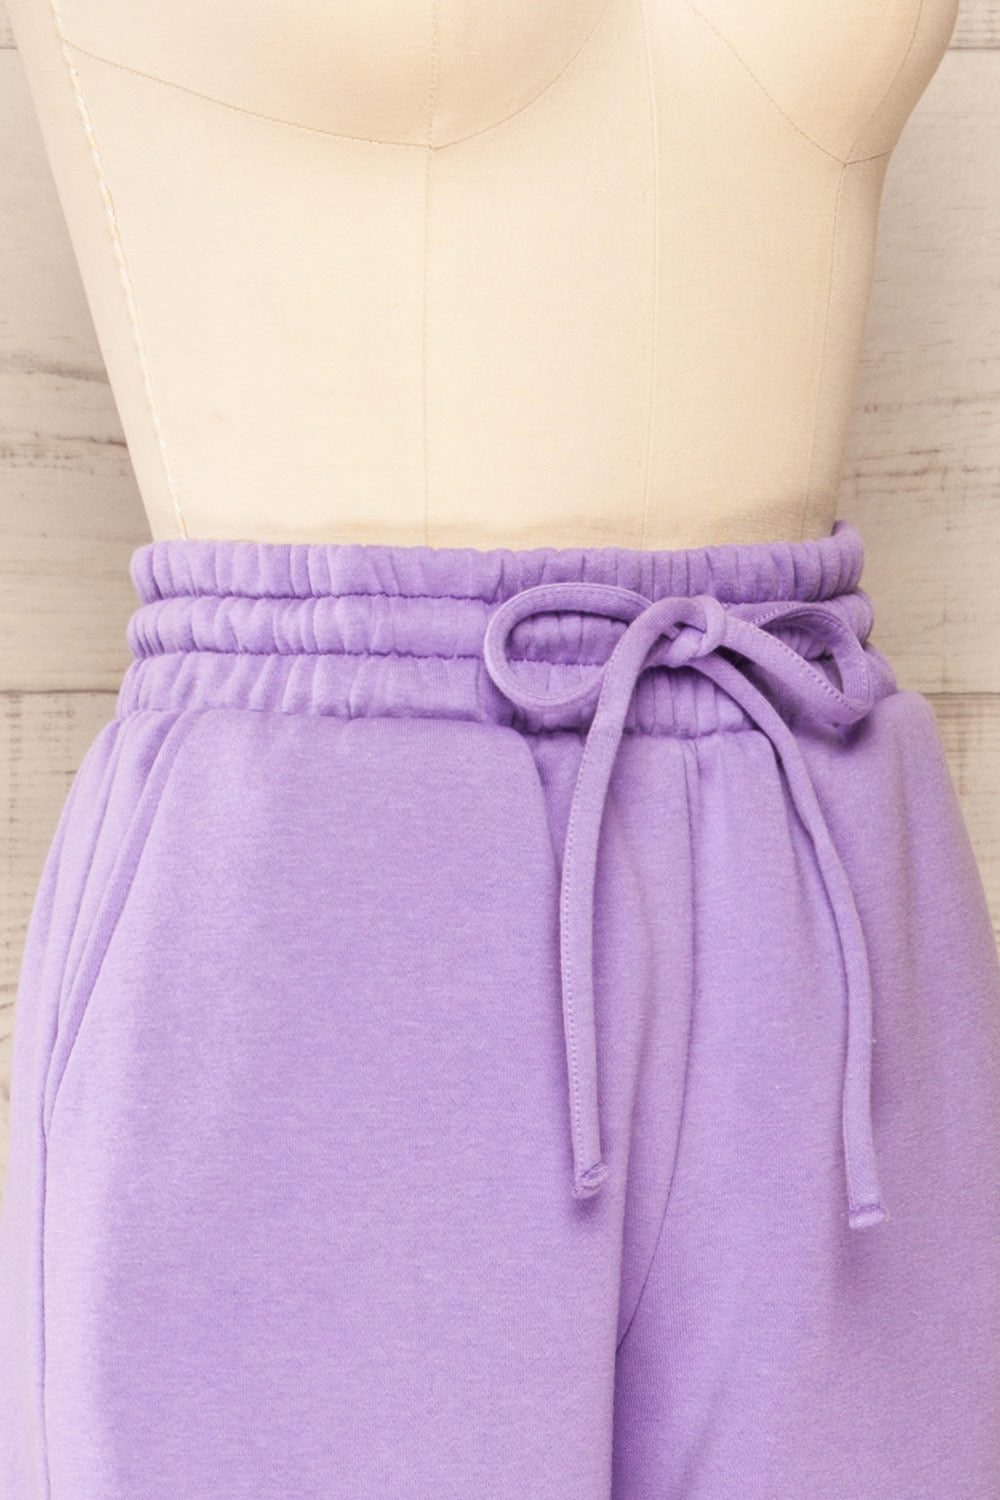 NWT Tek Gear Youth Pants Girls Size XXL 18-20 Ultra Soft Fleece Joggers  Lavender